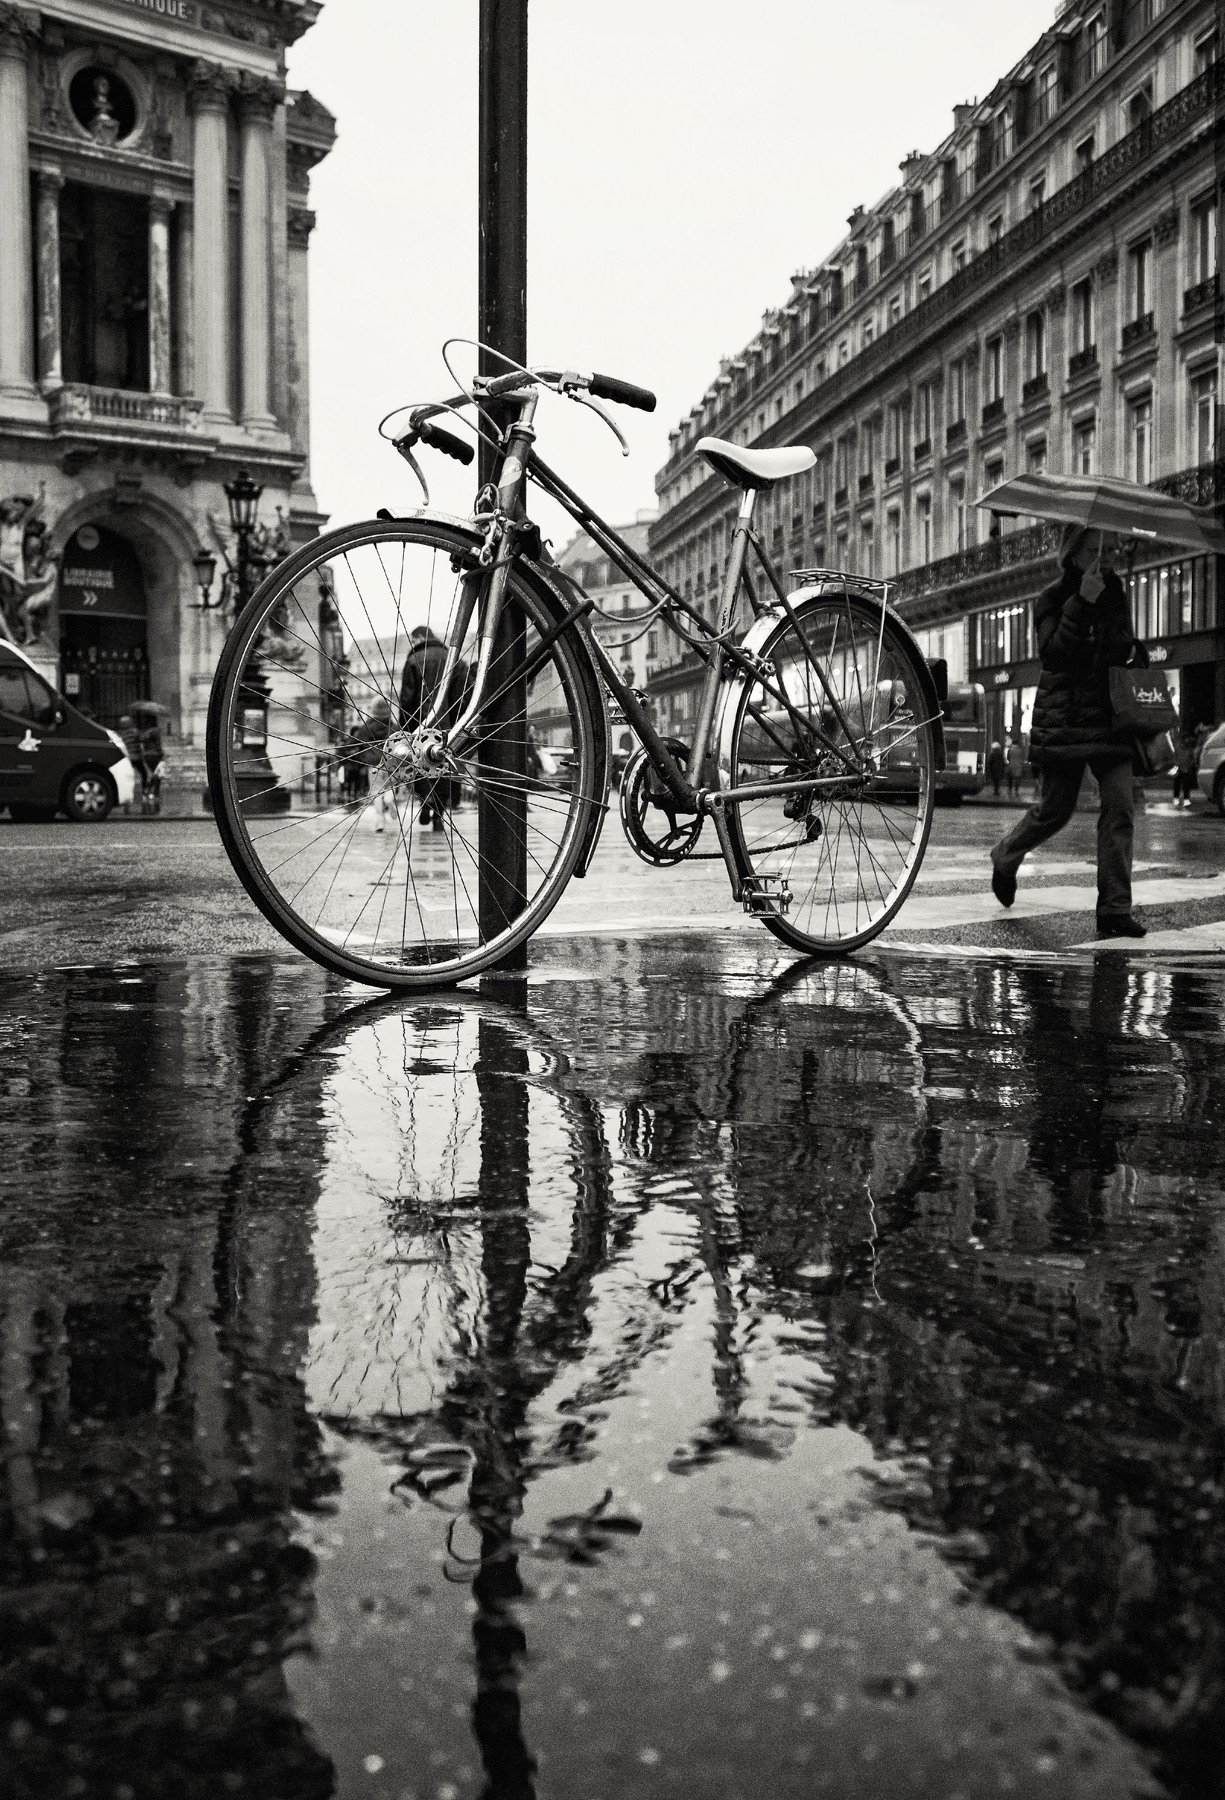 paris, cycle, rain, umbrella, puddle, reflex, france, париж, дождь, отражение, франция, зонт, лужа, Егор Бугримов